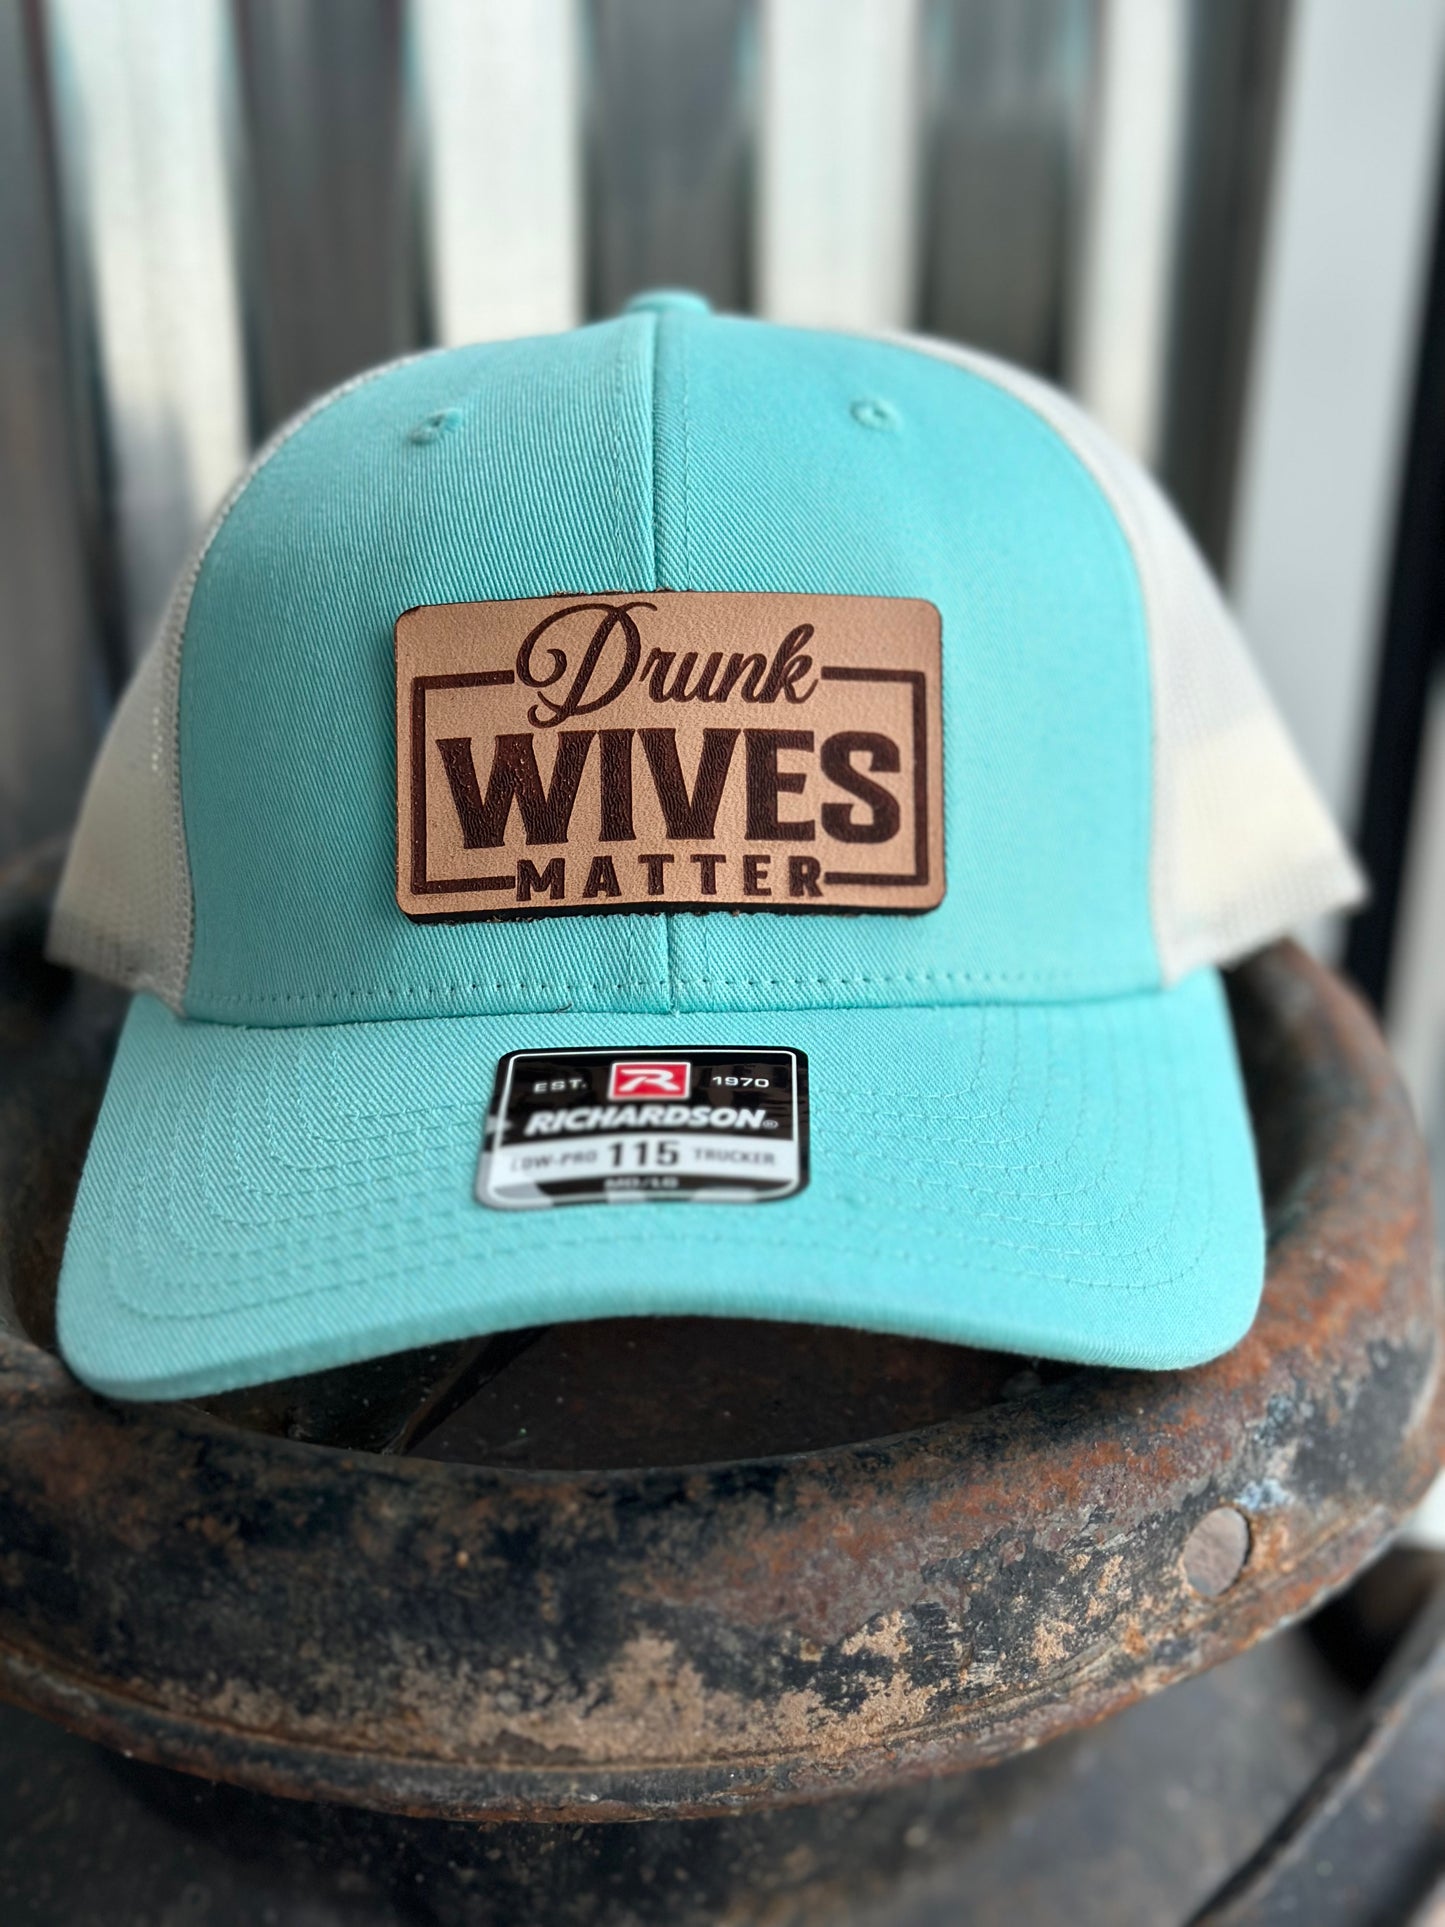 Drunk Wives Matter - Ponytail Hat